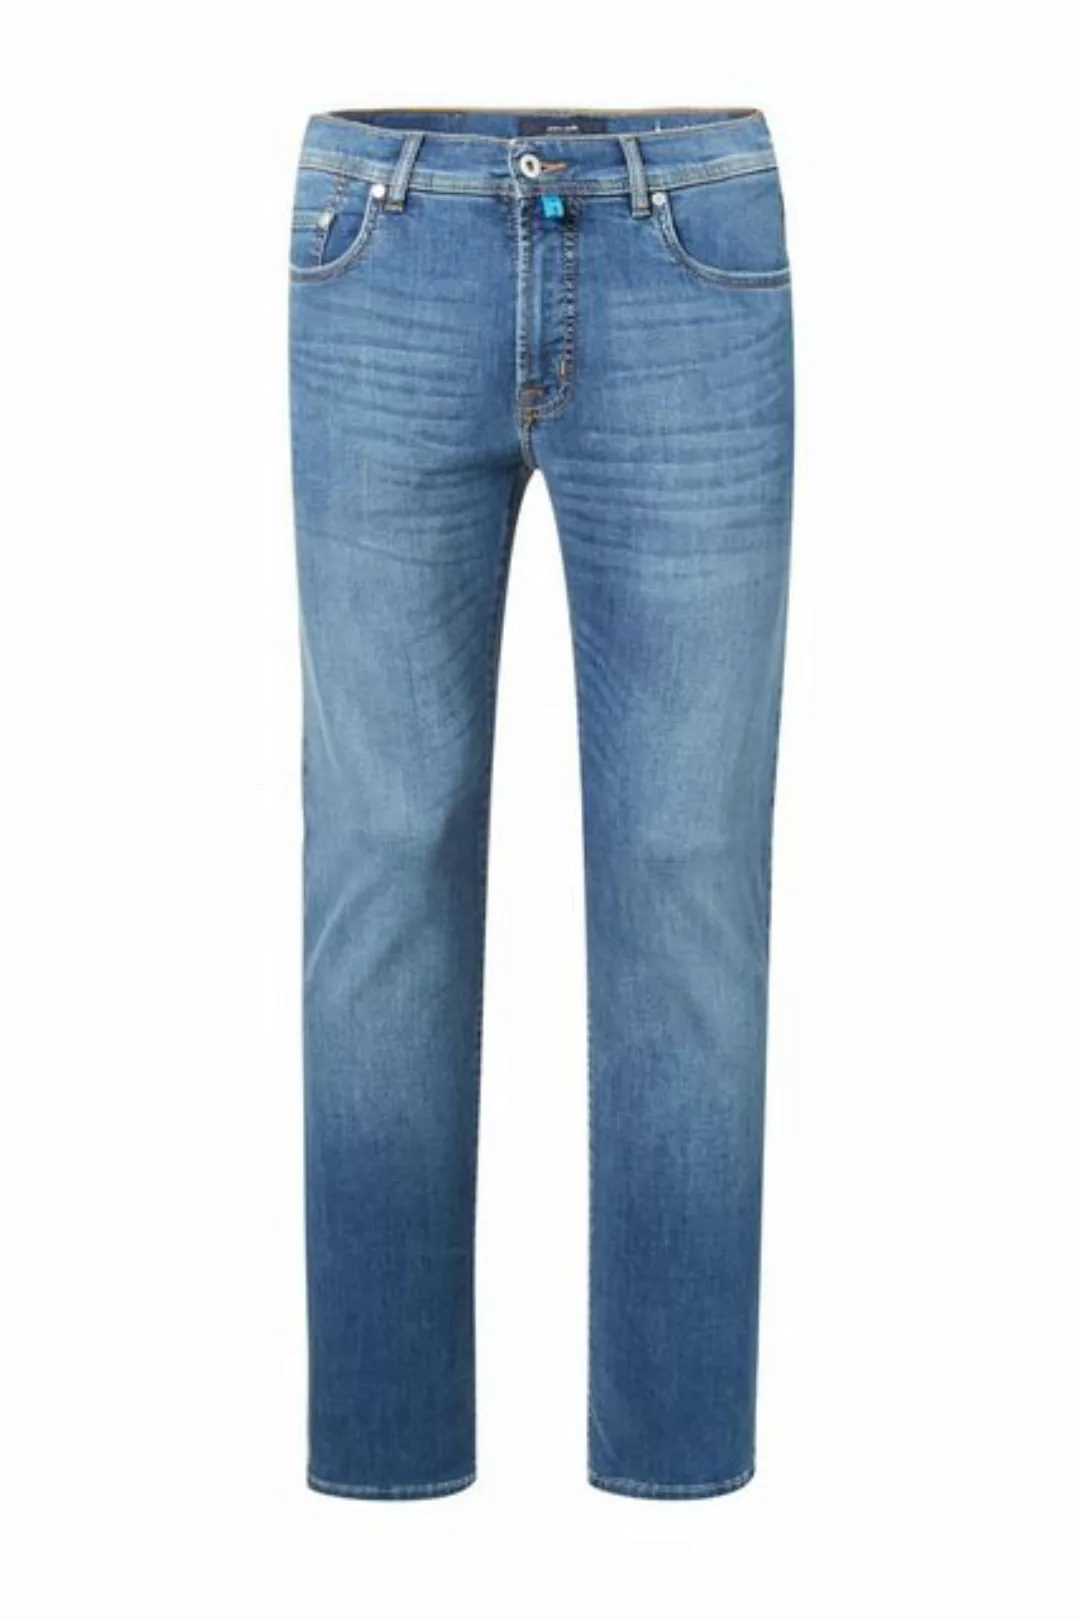 Pierre Cardin Jeans Lyon 30915/000/07721/01 günstig online kaufen